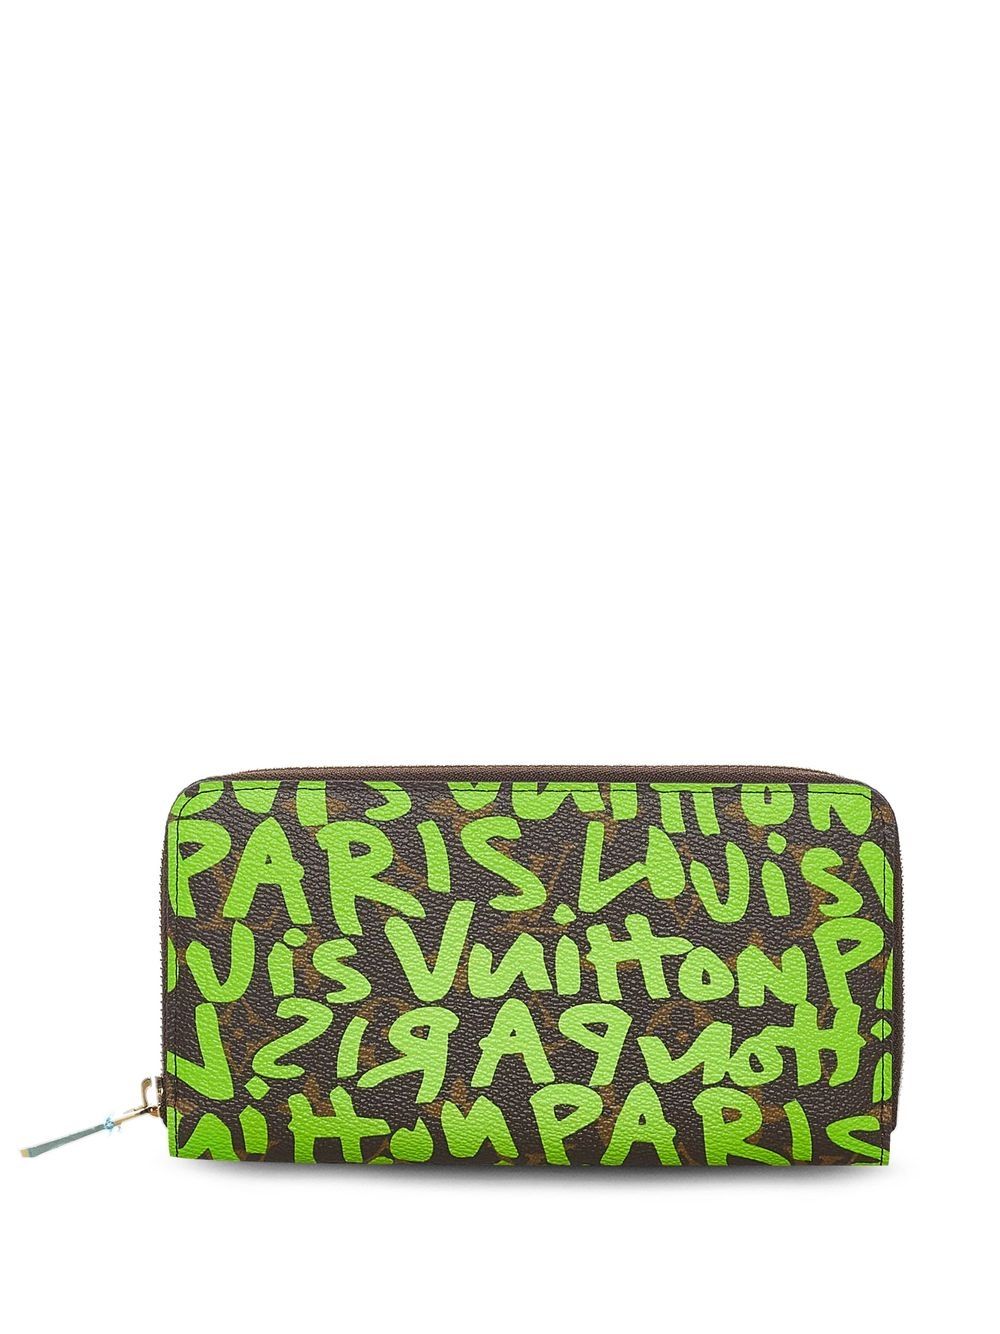 Louis Vuitton Neon Green Graffiti Zippy Wallet by Stephen Sprouse